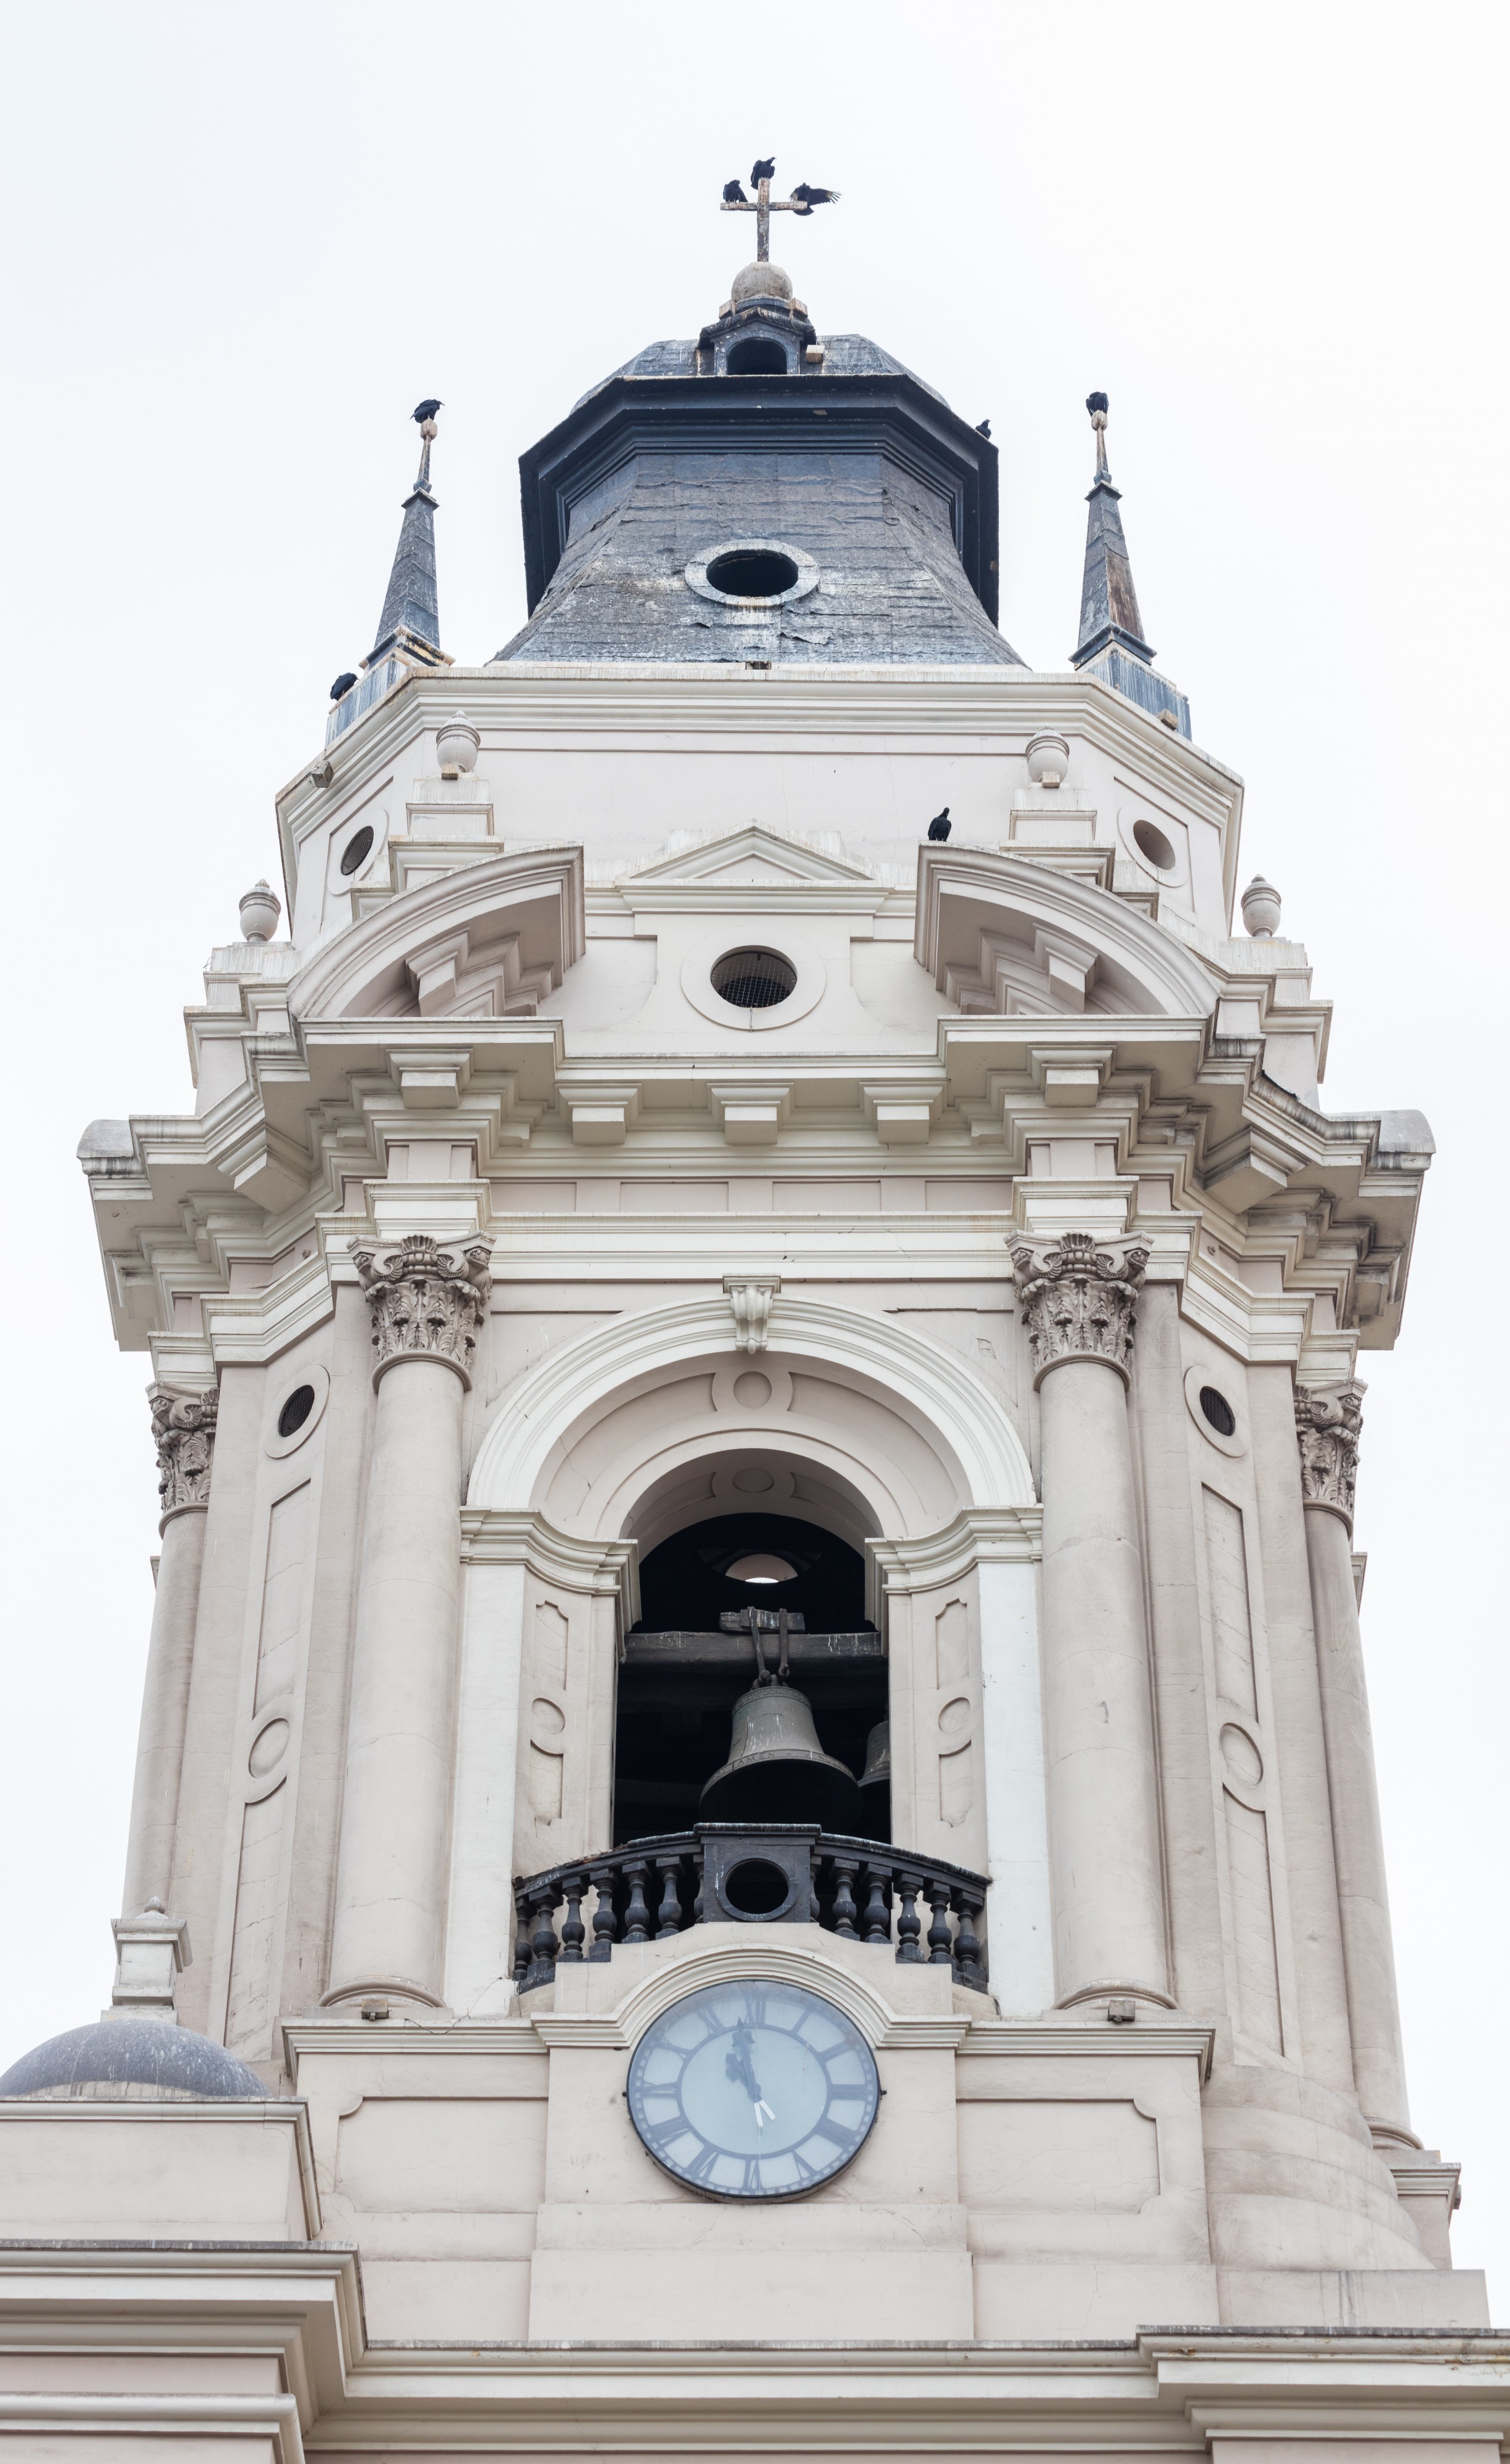 Catedral, Plaza de Armas, Lima, Perú, 2015-07-28, DD 30